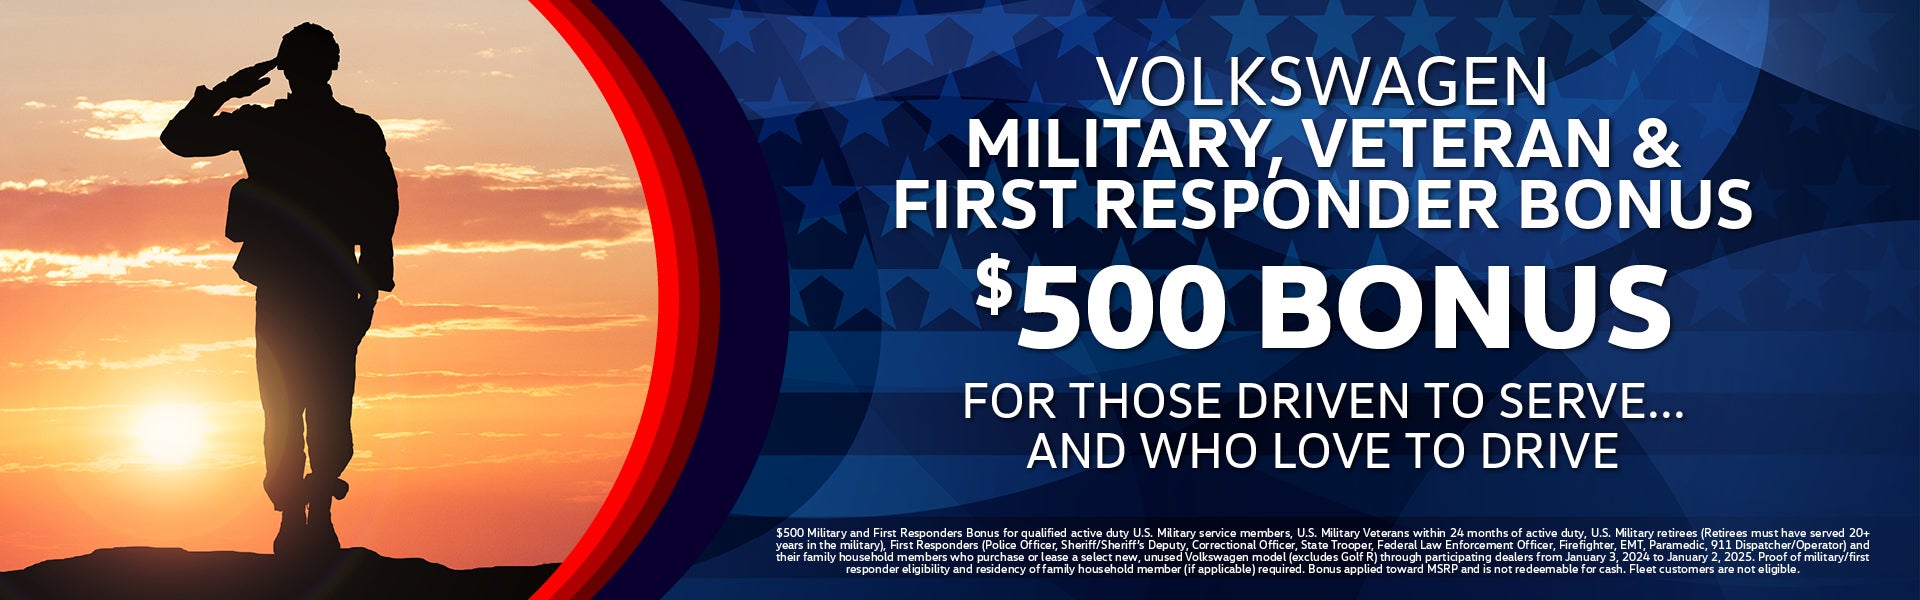 VW Military, Veteran & First Responder Bonus